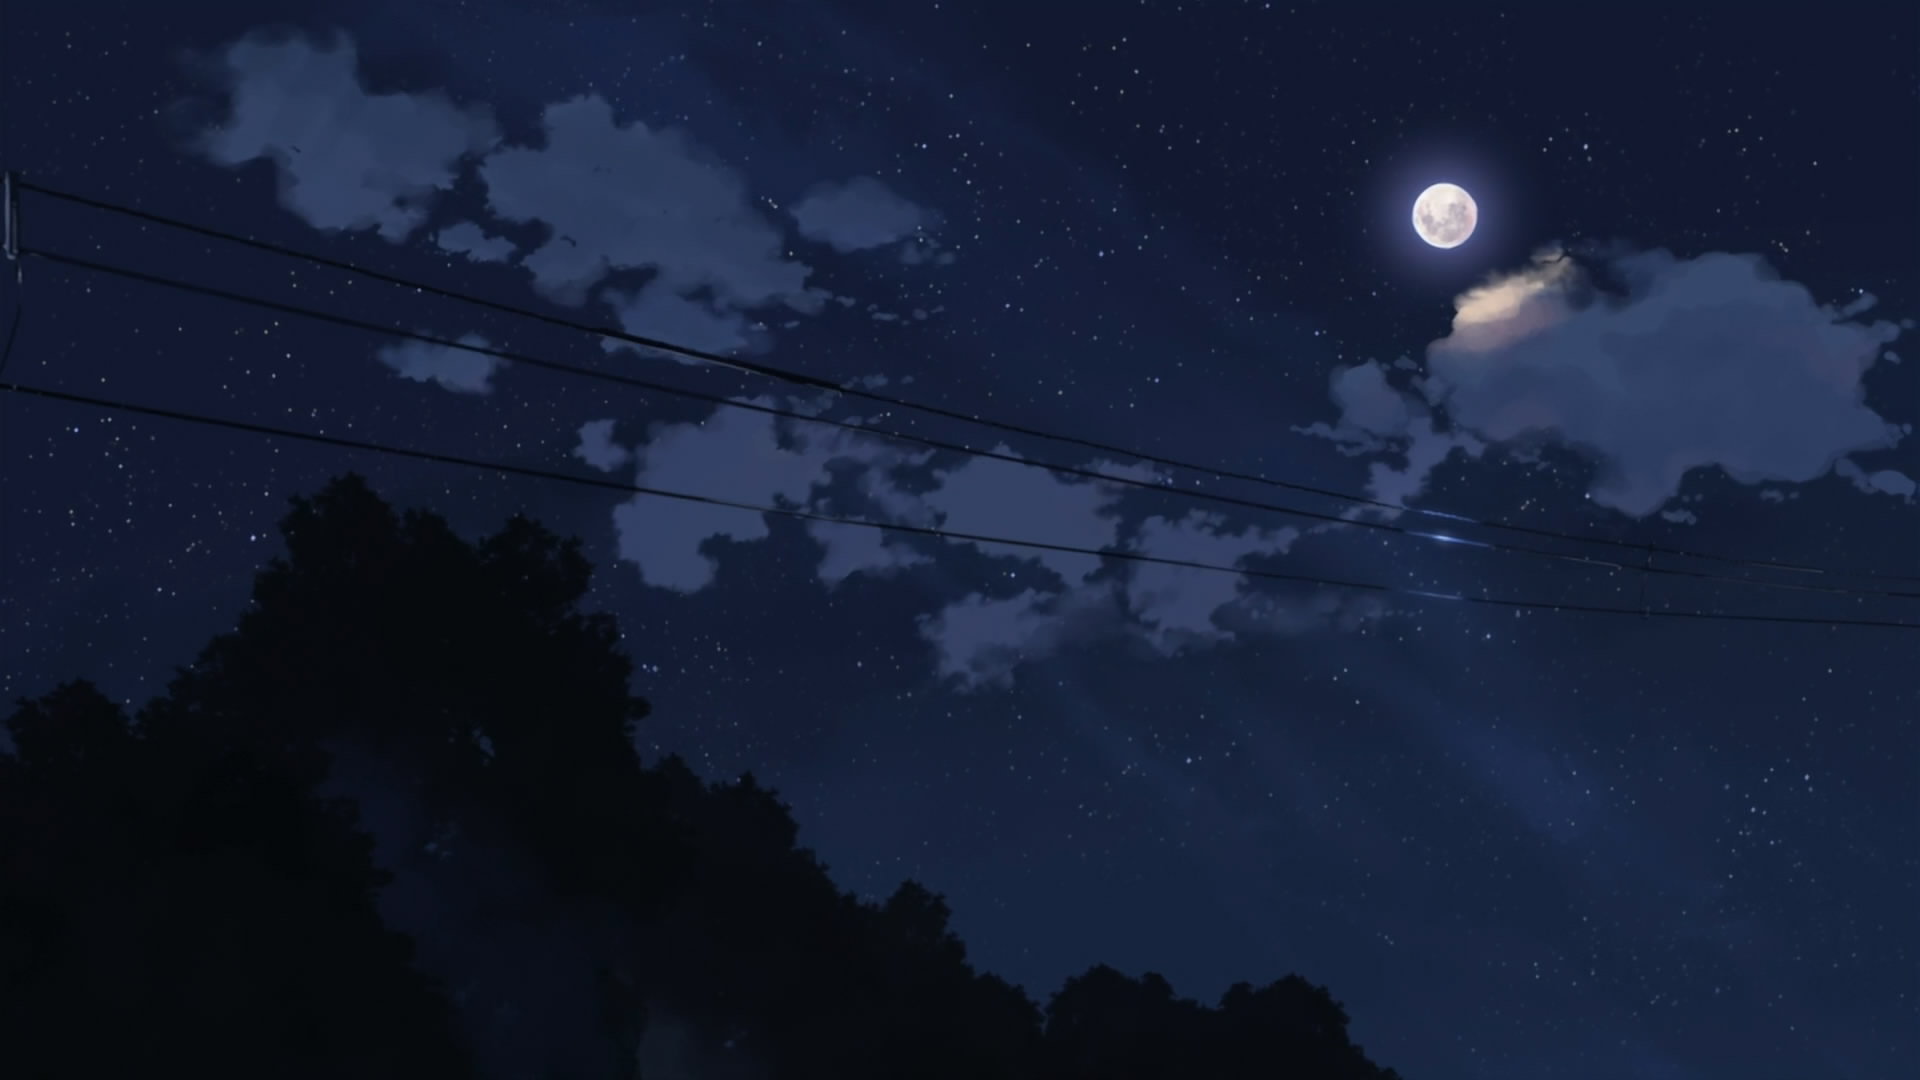 Download Anime Night Sky Wallpaper 5776 1920x1080 px High